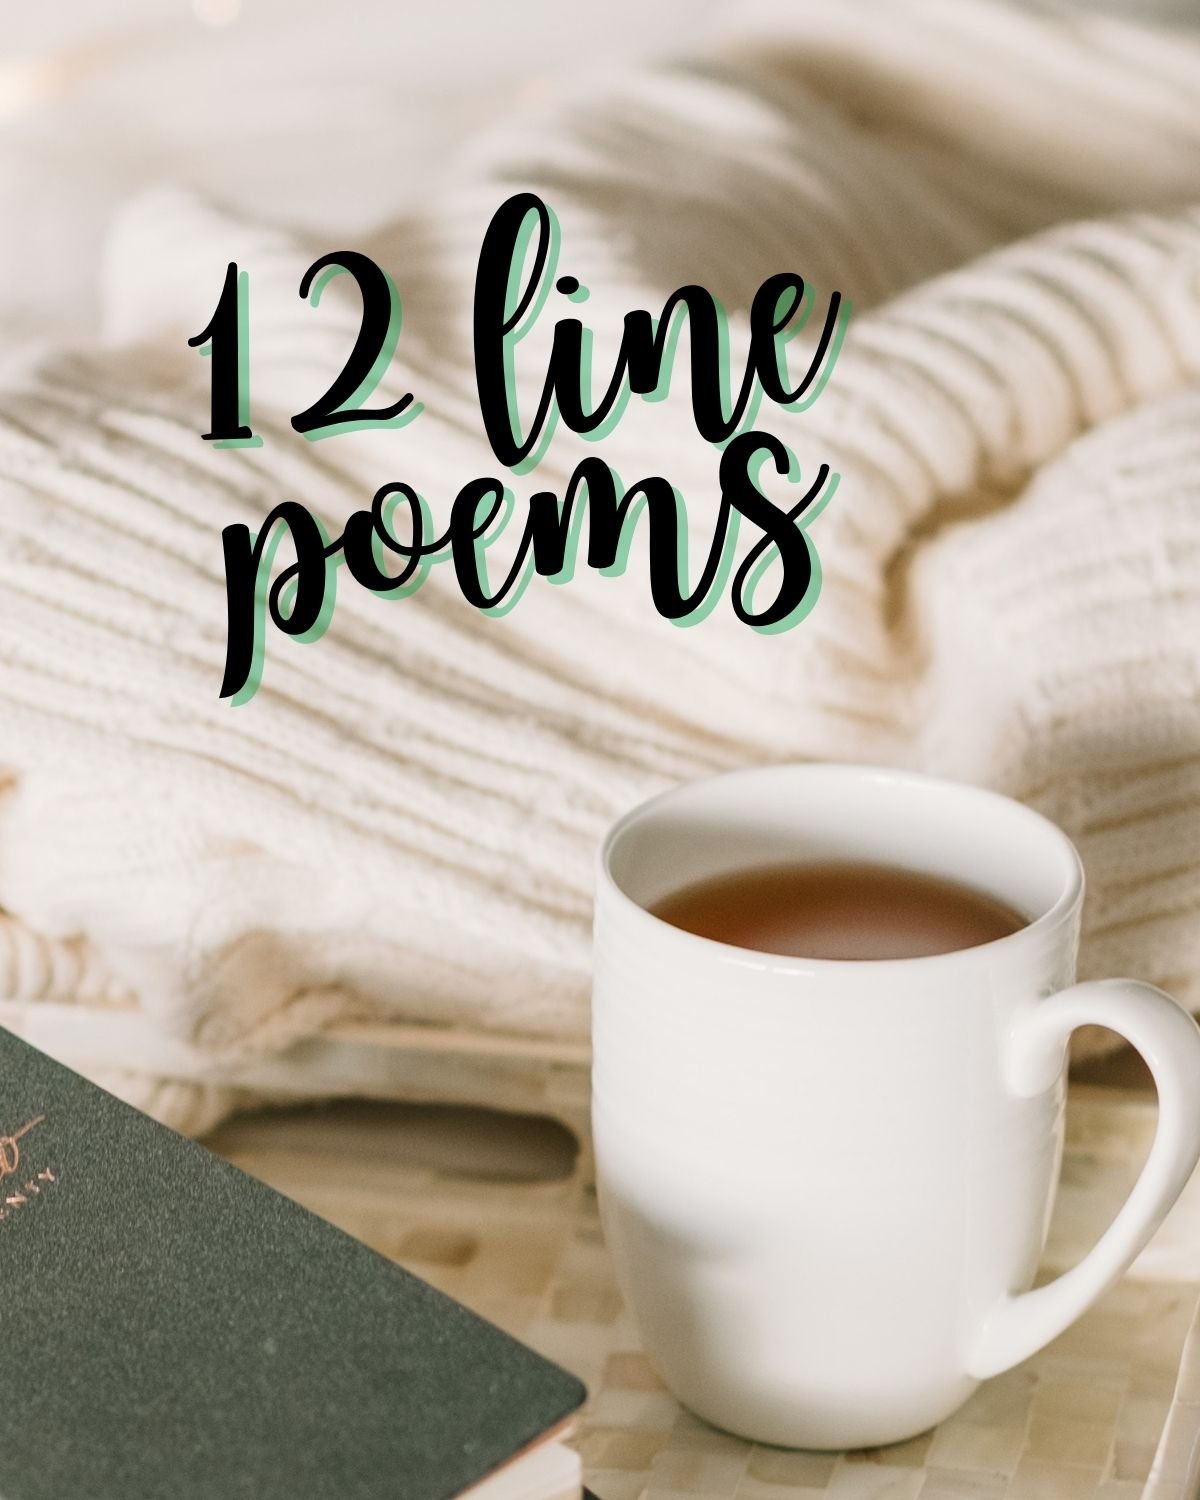 12 Line Poems inspiration - A mug, book, and blanket 